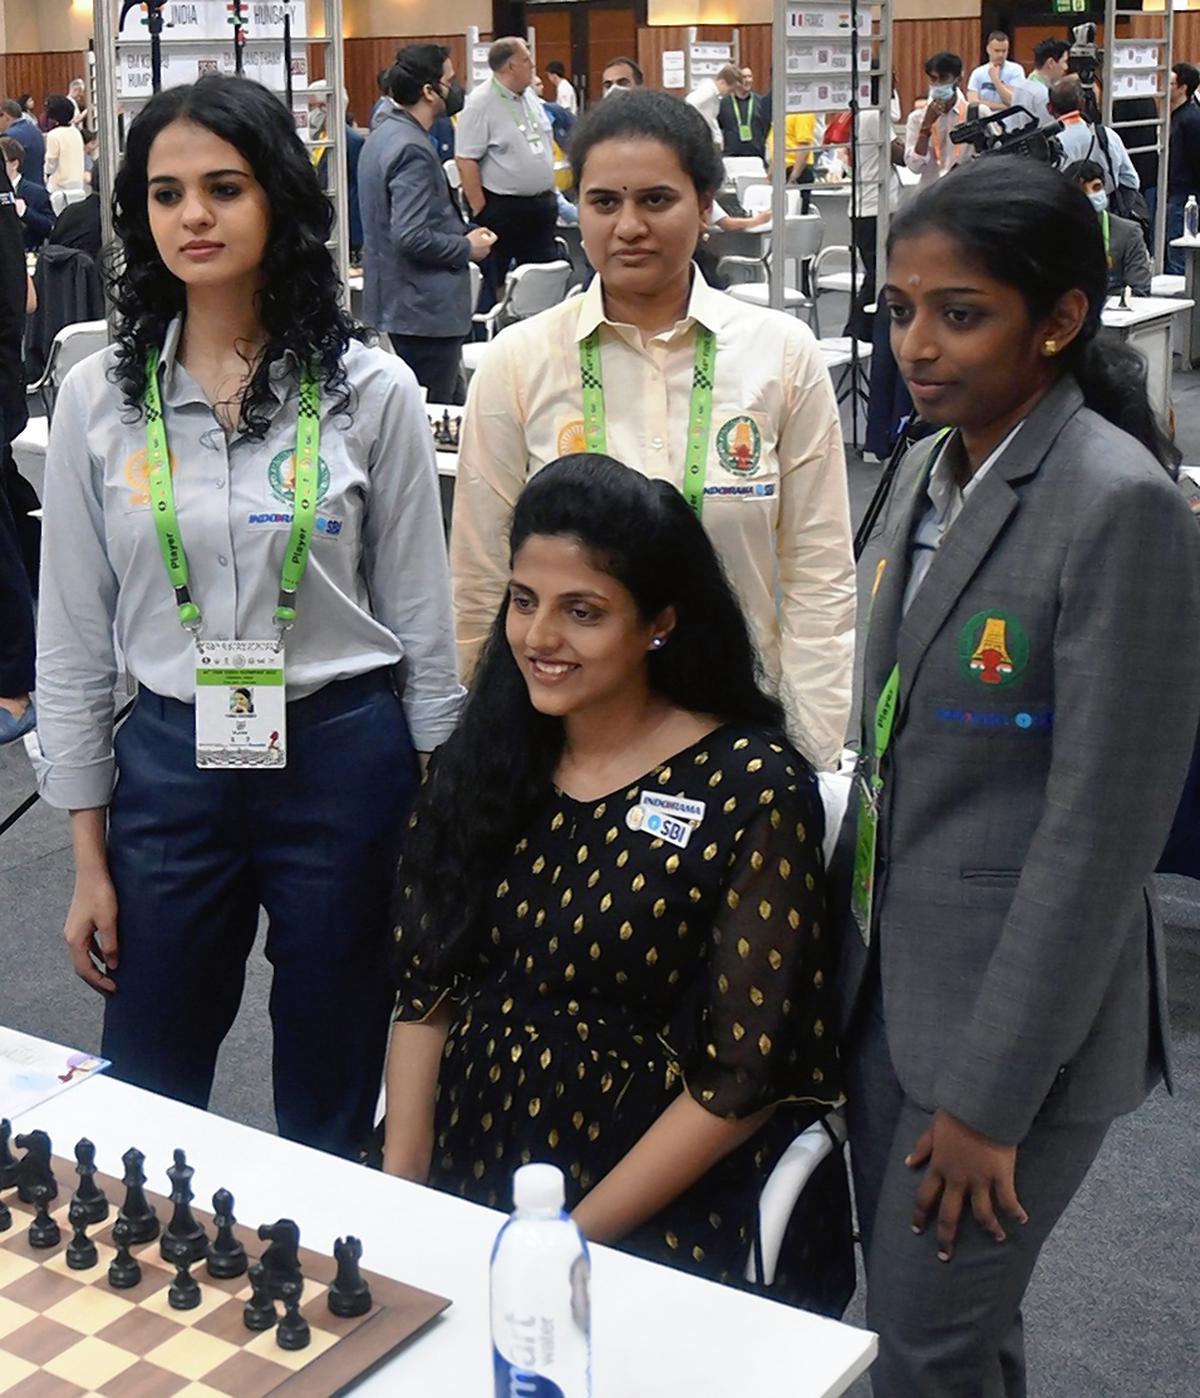 Tania Sachdev, GM Koneru Humpy, GM Dronavalli Harika (seated), and R. Vaishali, pose on day 4 of the 44th Chess Olympiad at Mamallapuram on Monday, August 1. 